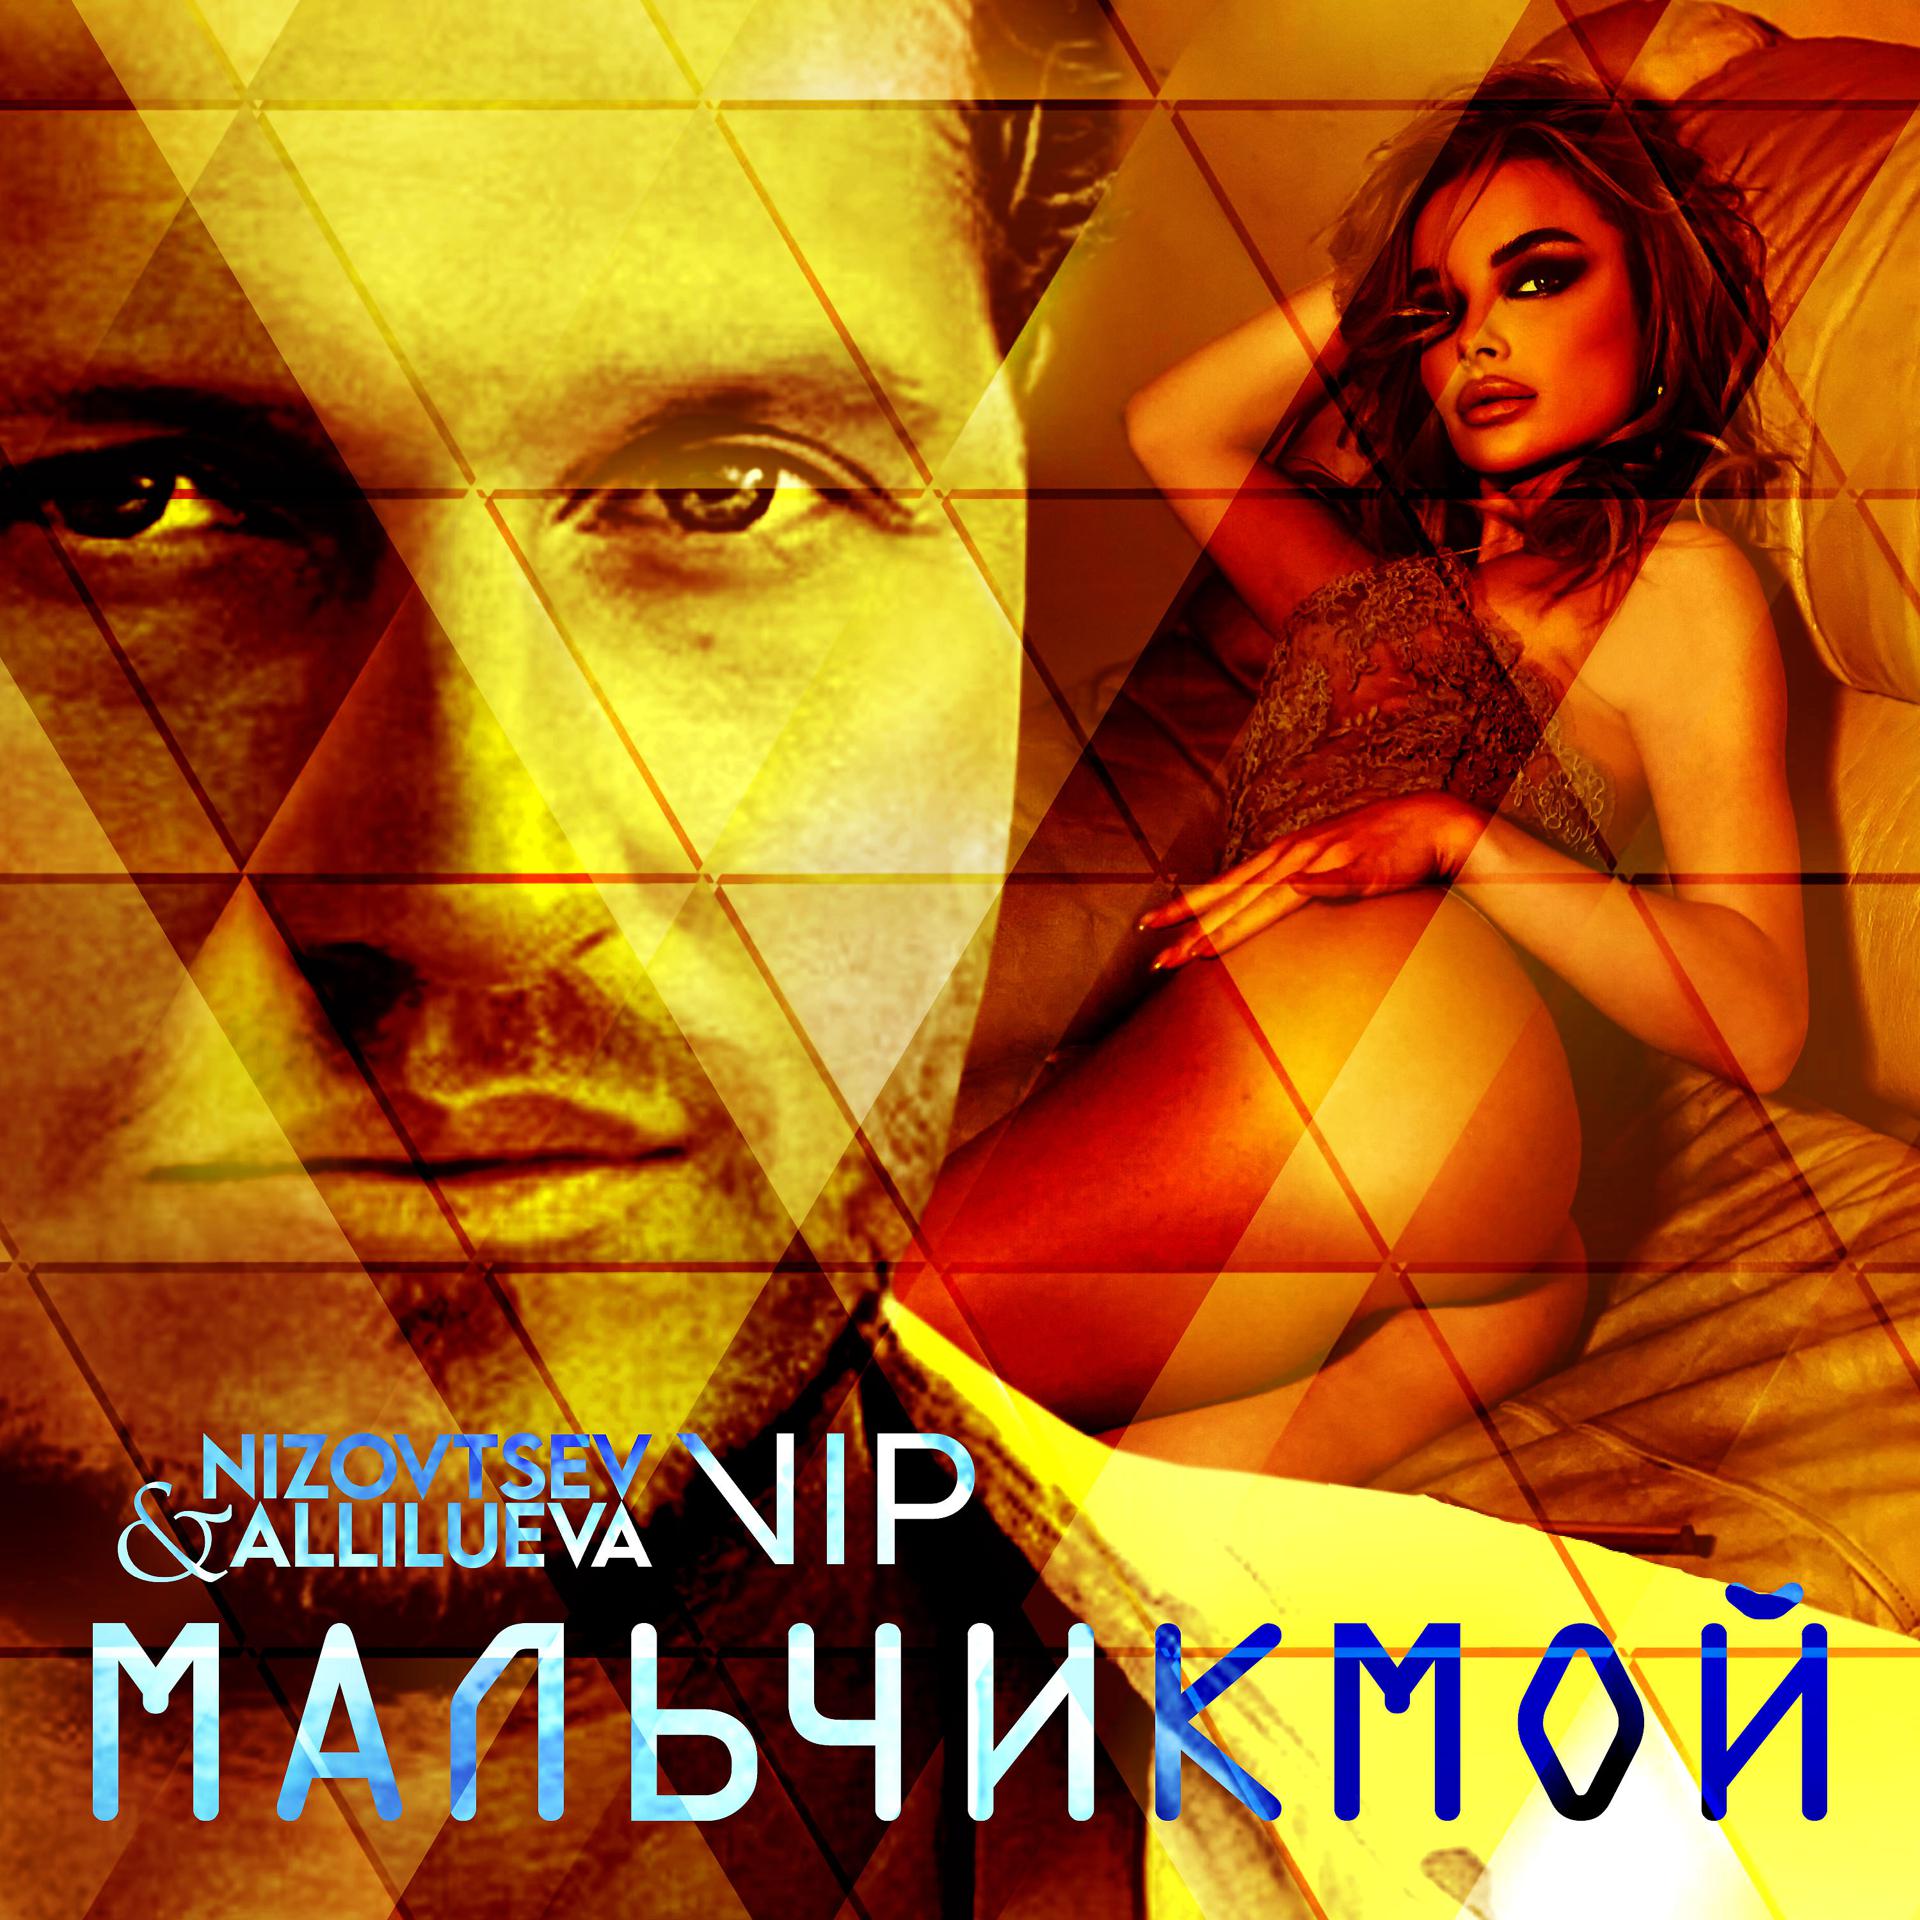 Постер к треку Nizovtsev, Allilueva, Группа VIP - Мальчик мой